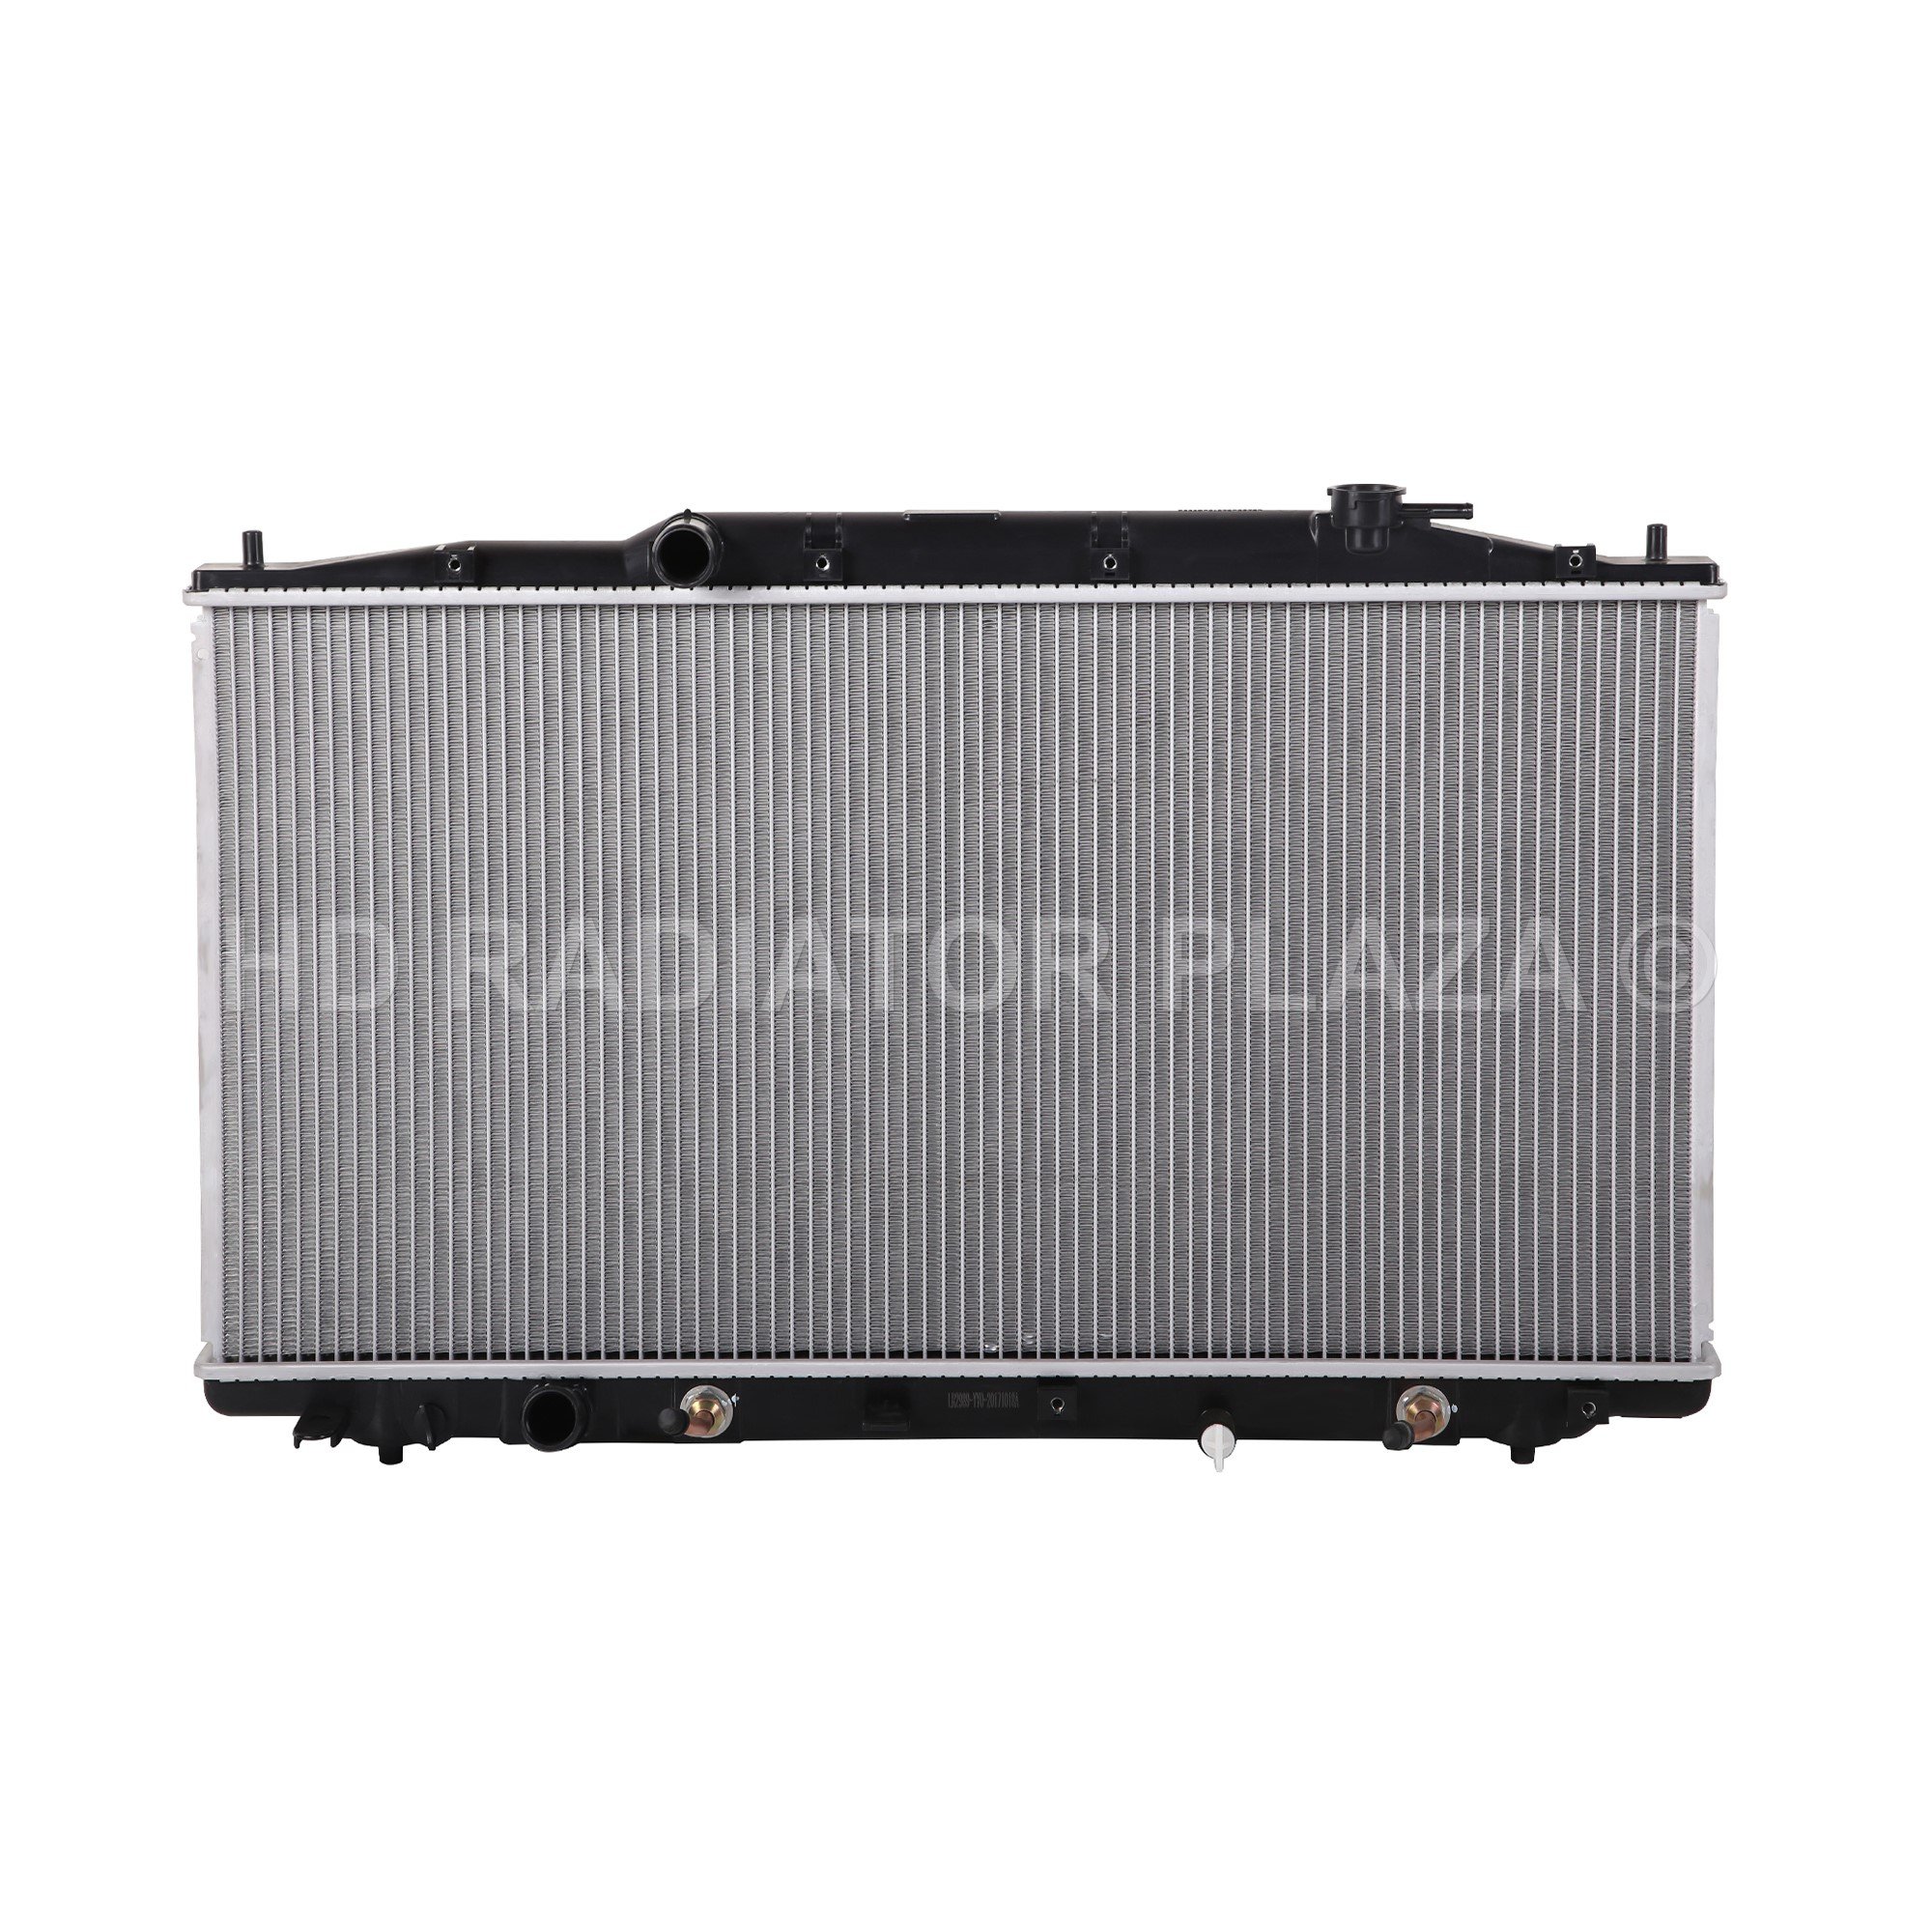 Radiator for 08-18 Acura RDX, Honda Accord / Crosstour